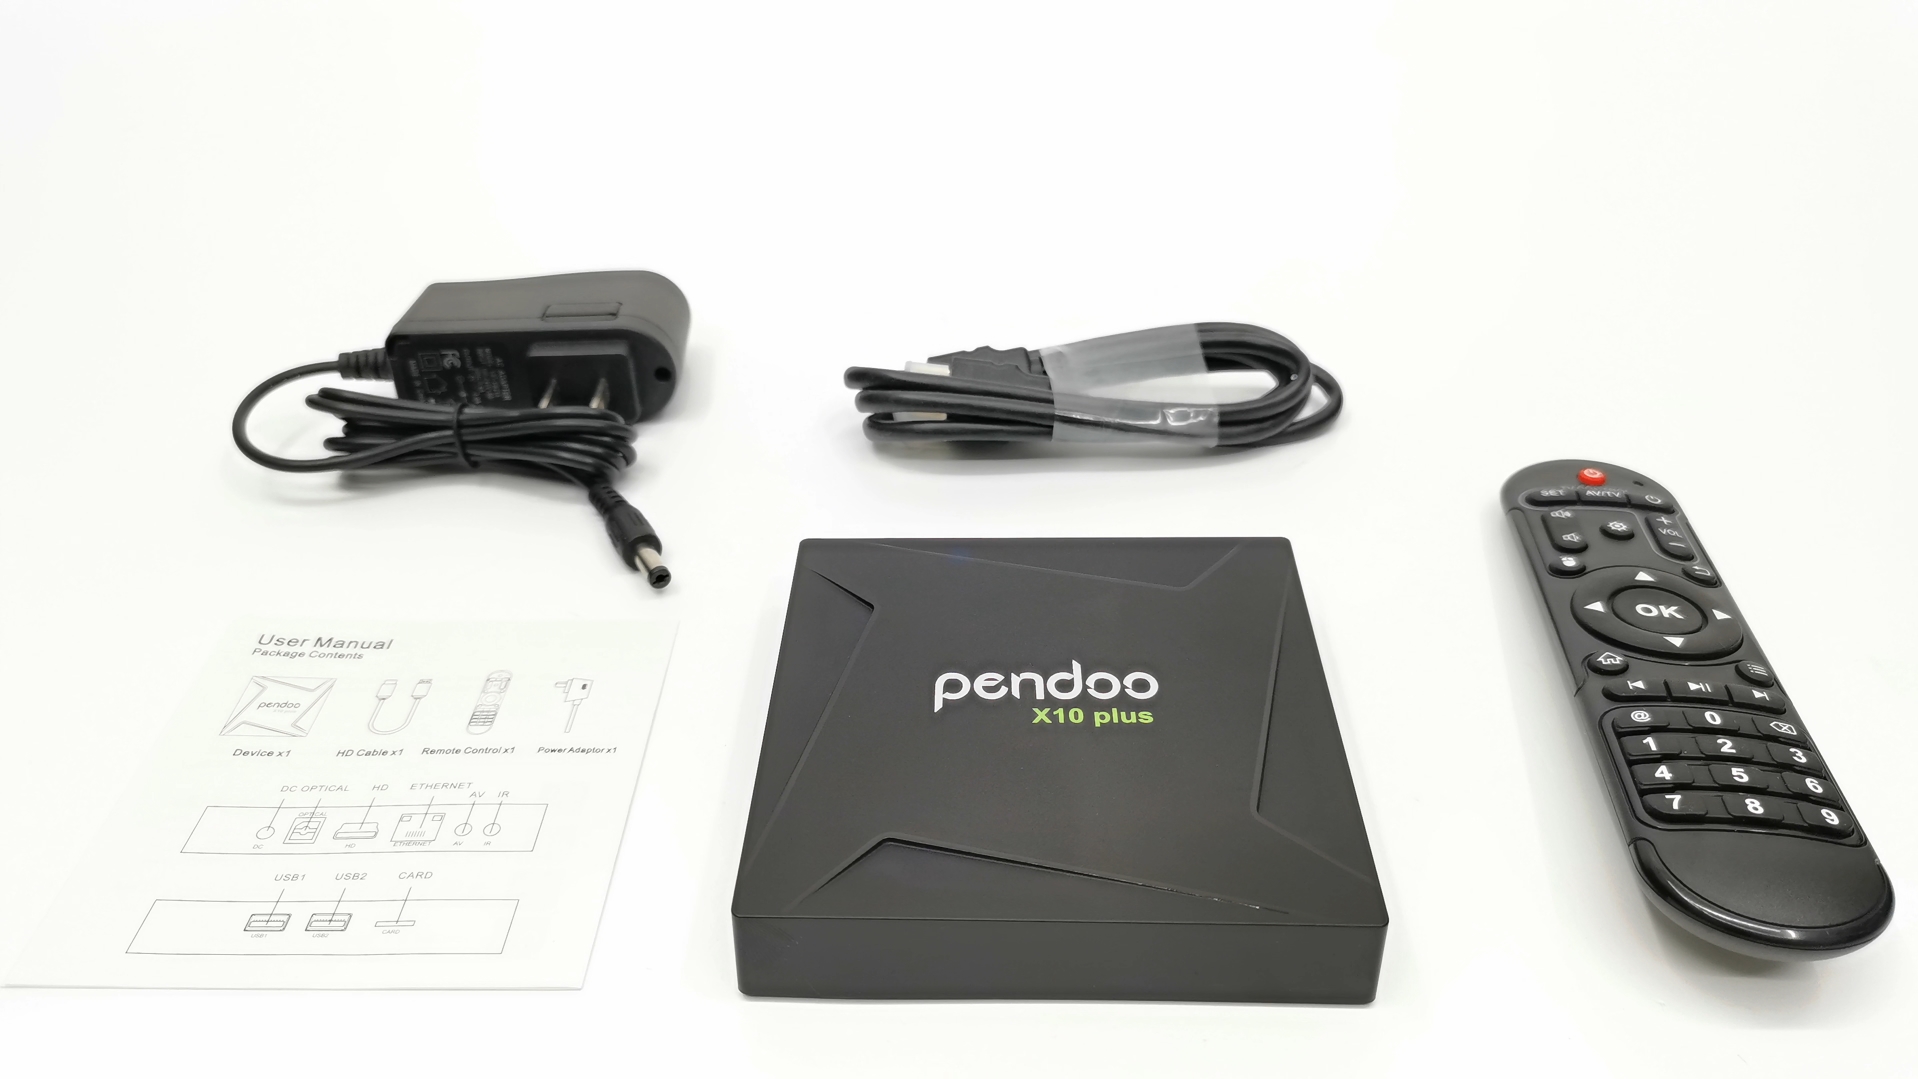 Pendoo X10 Plus in the box